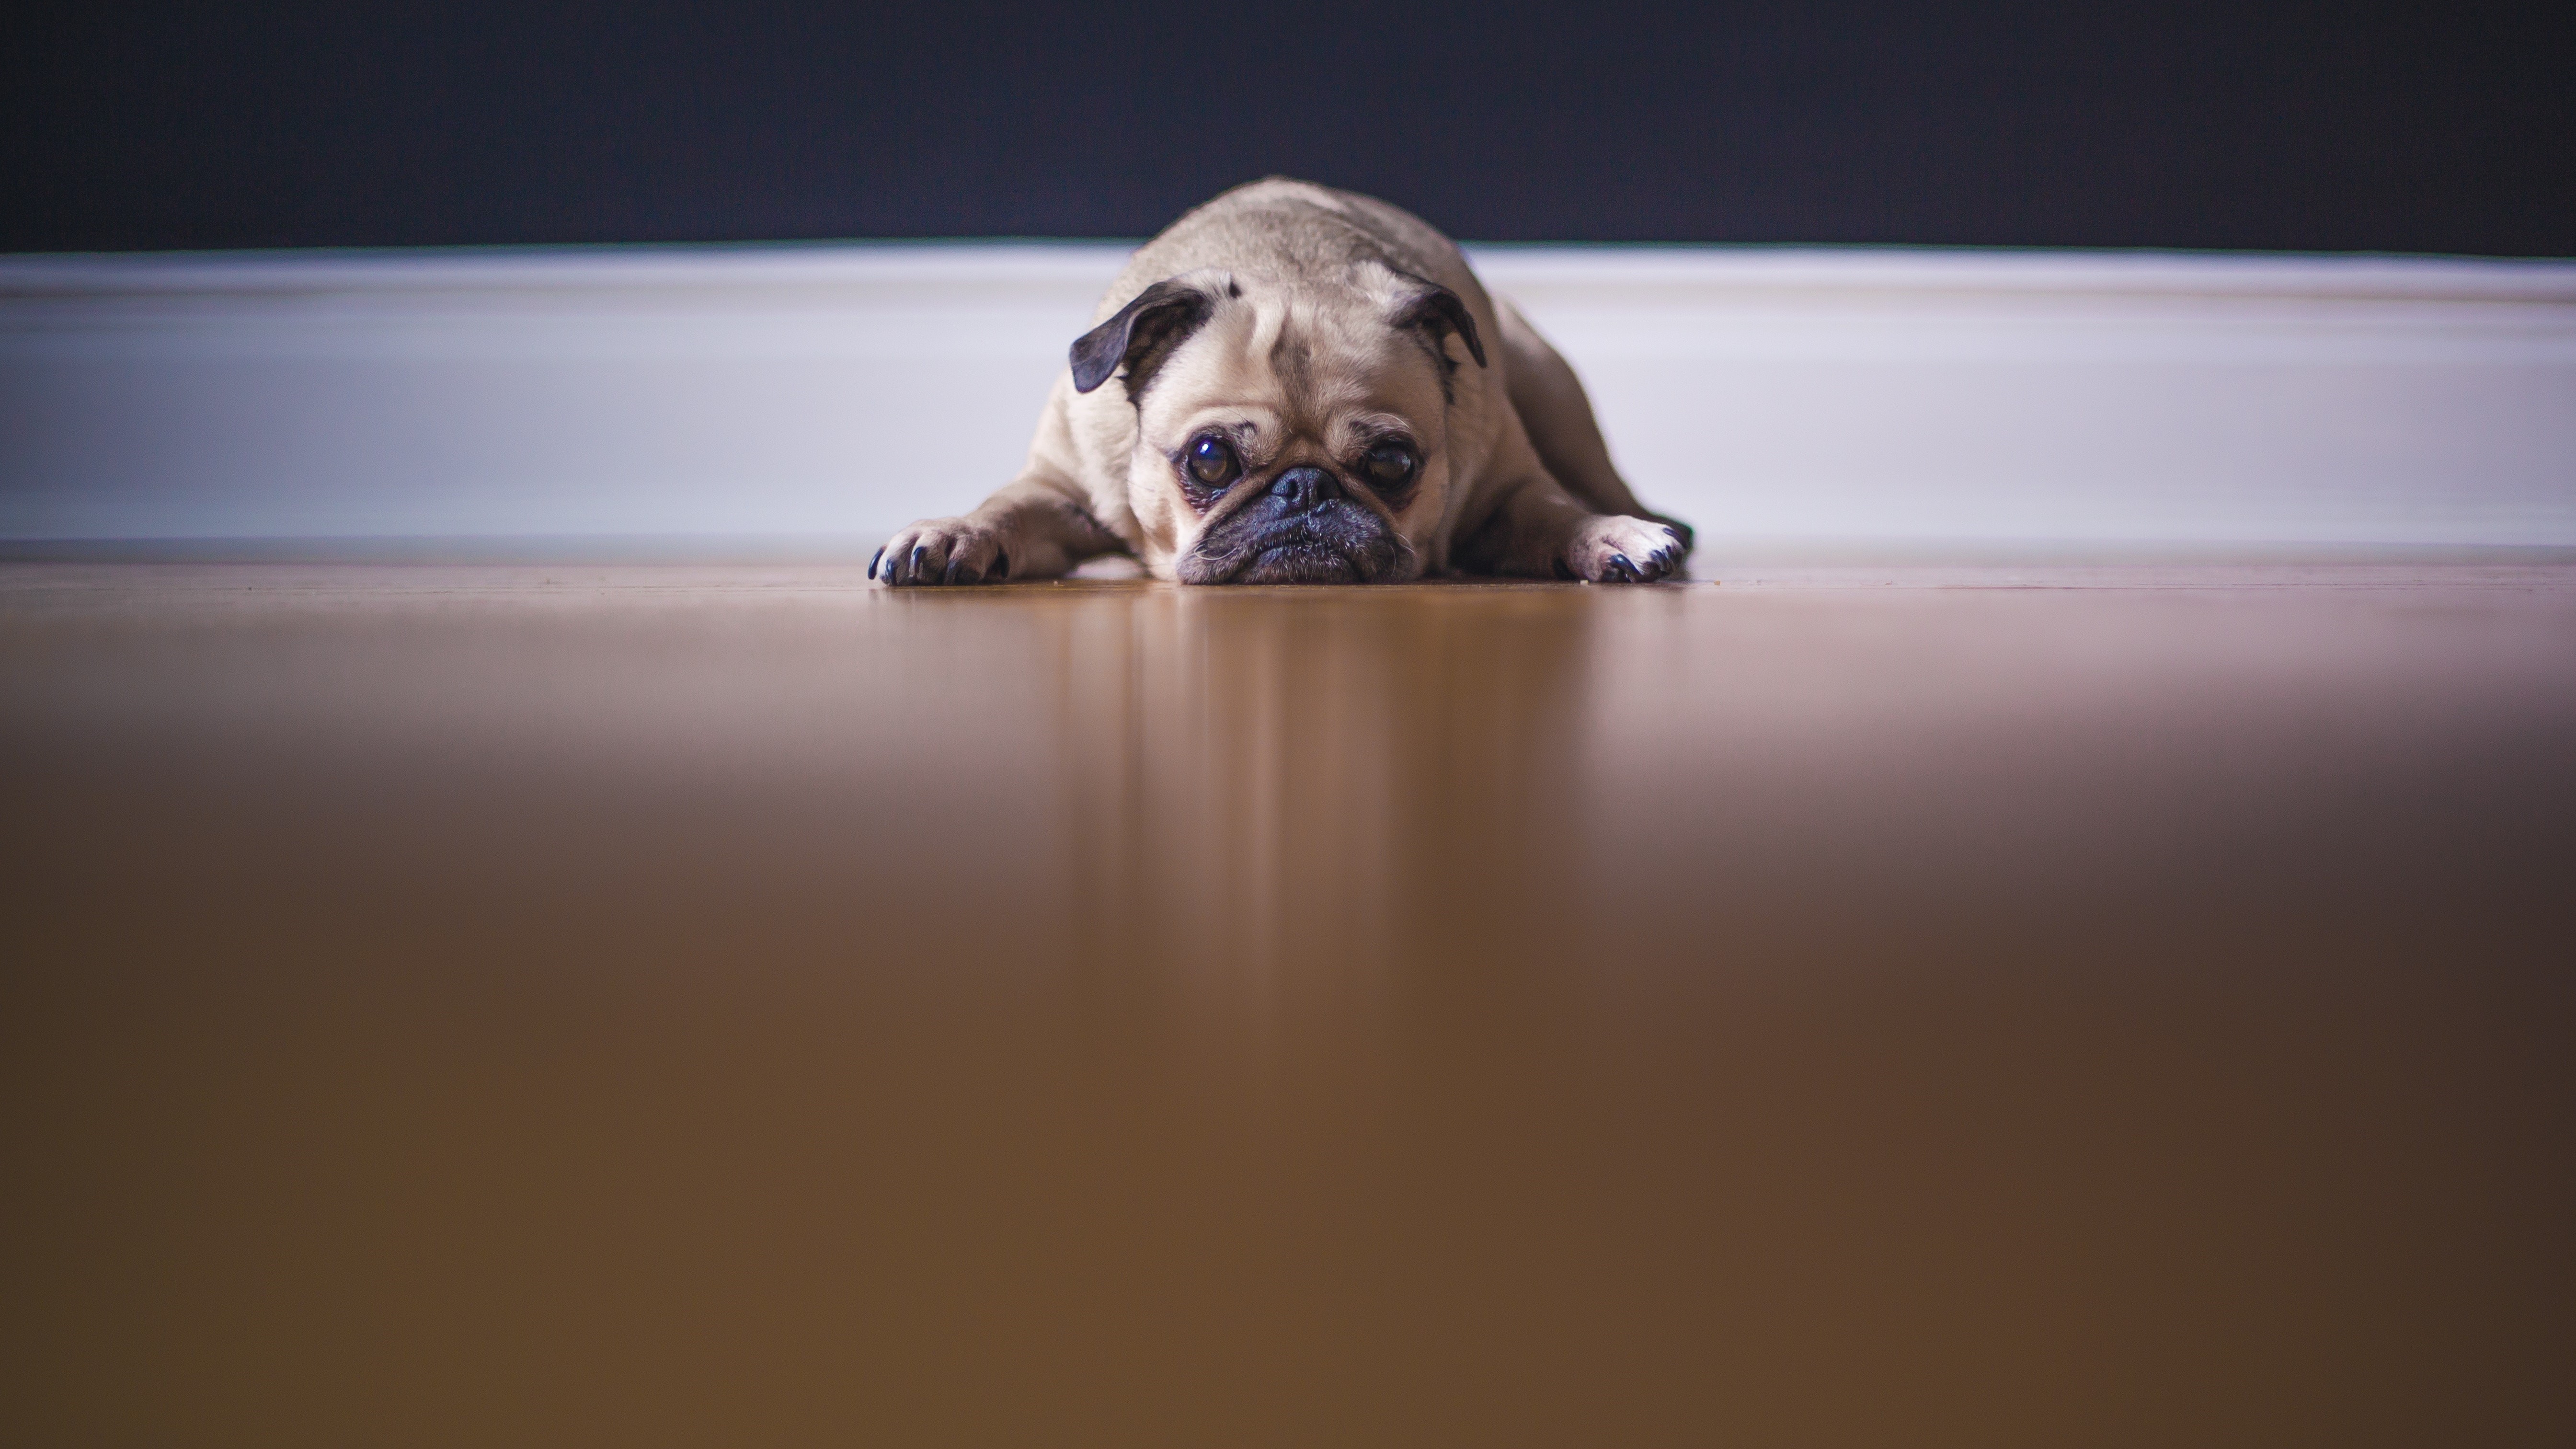 Sad pug puppy laying on floor.